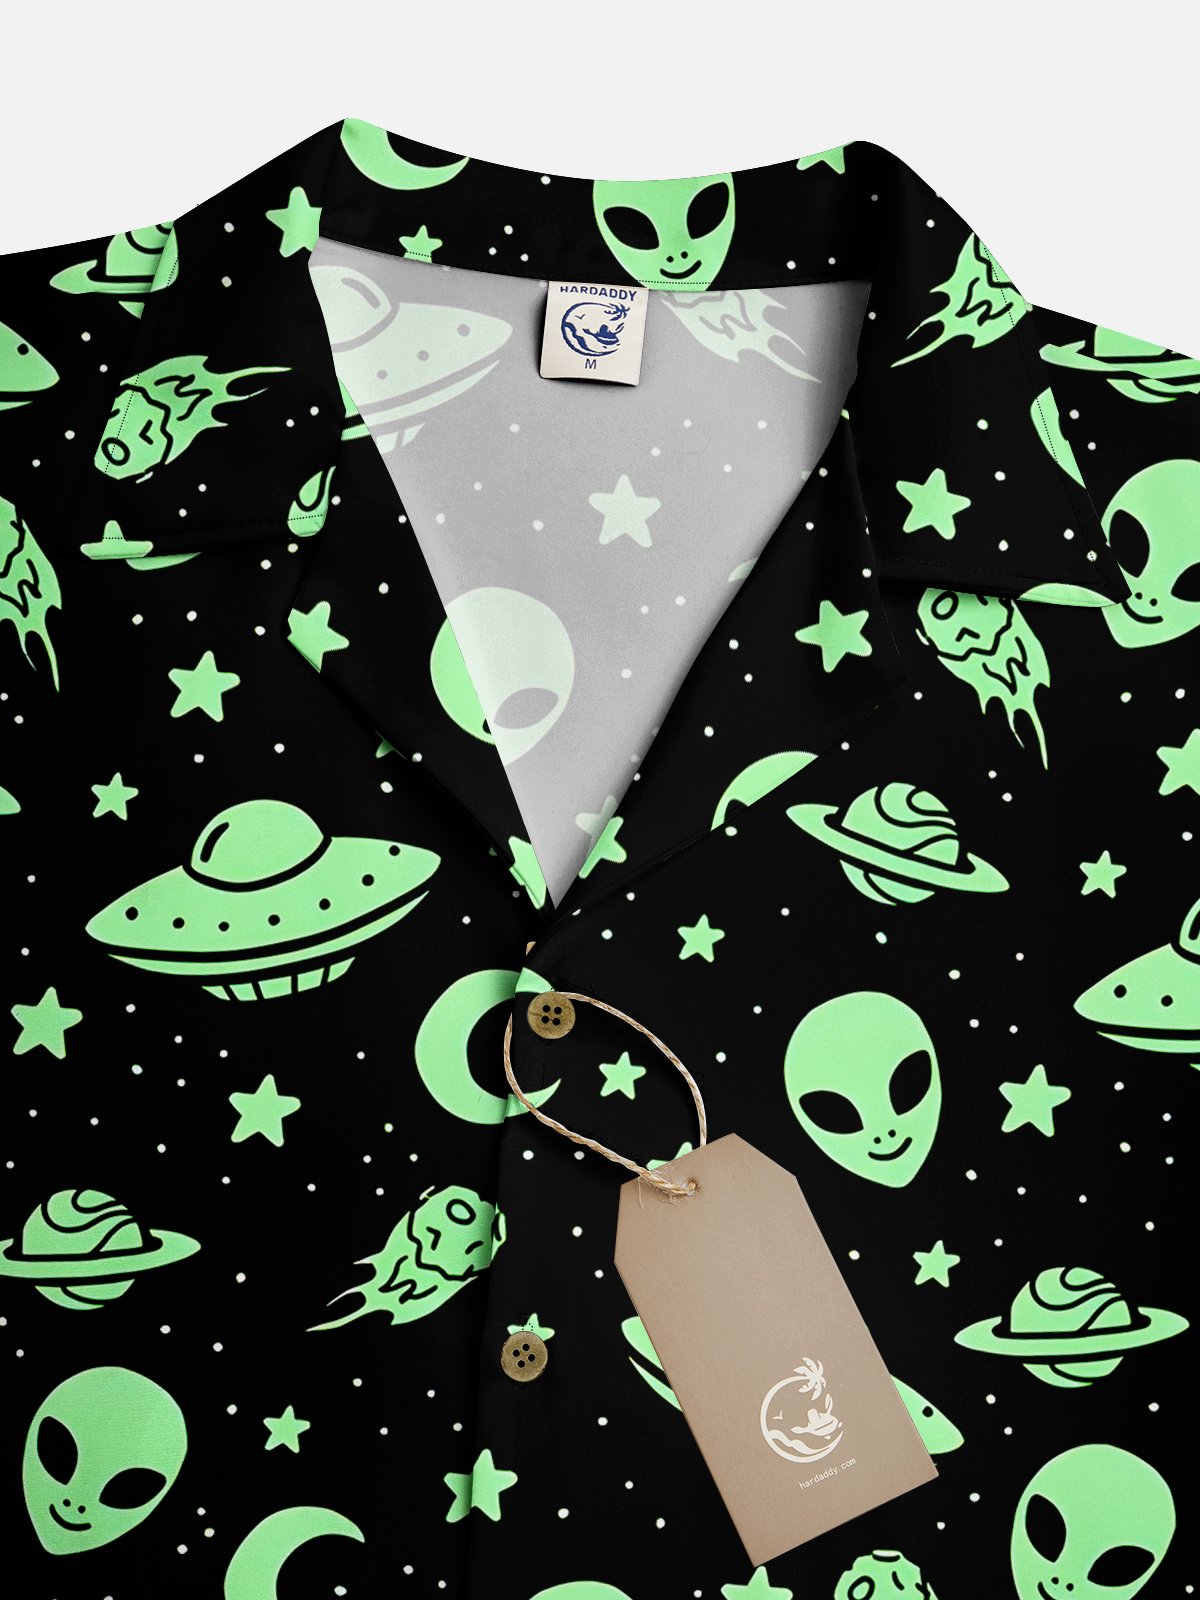 Moisture Wicking Spaceship Alien Short Sleeve Aloha Shirt